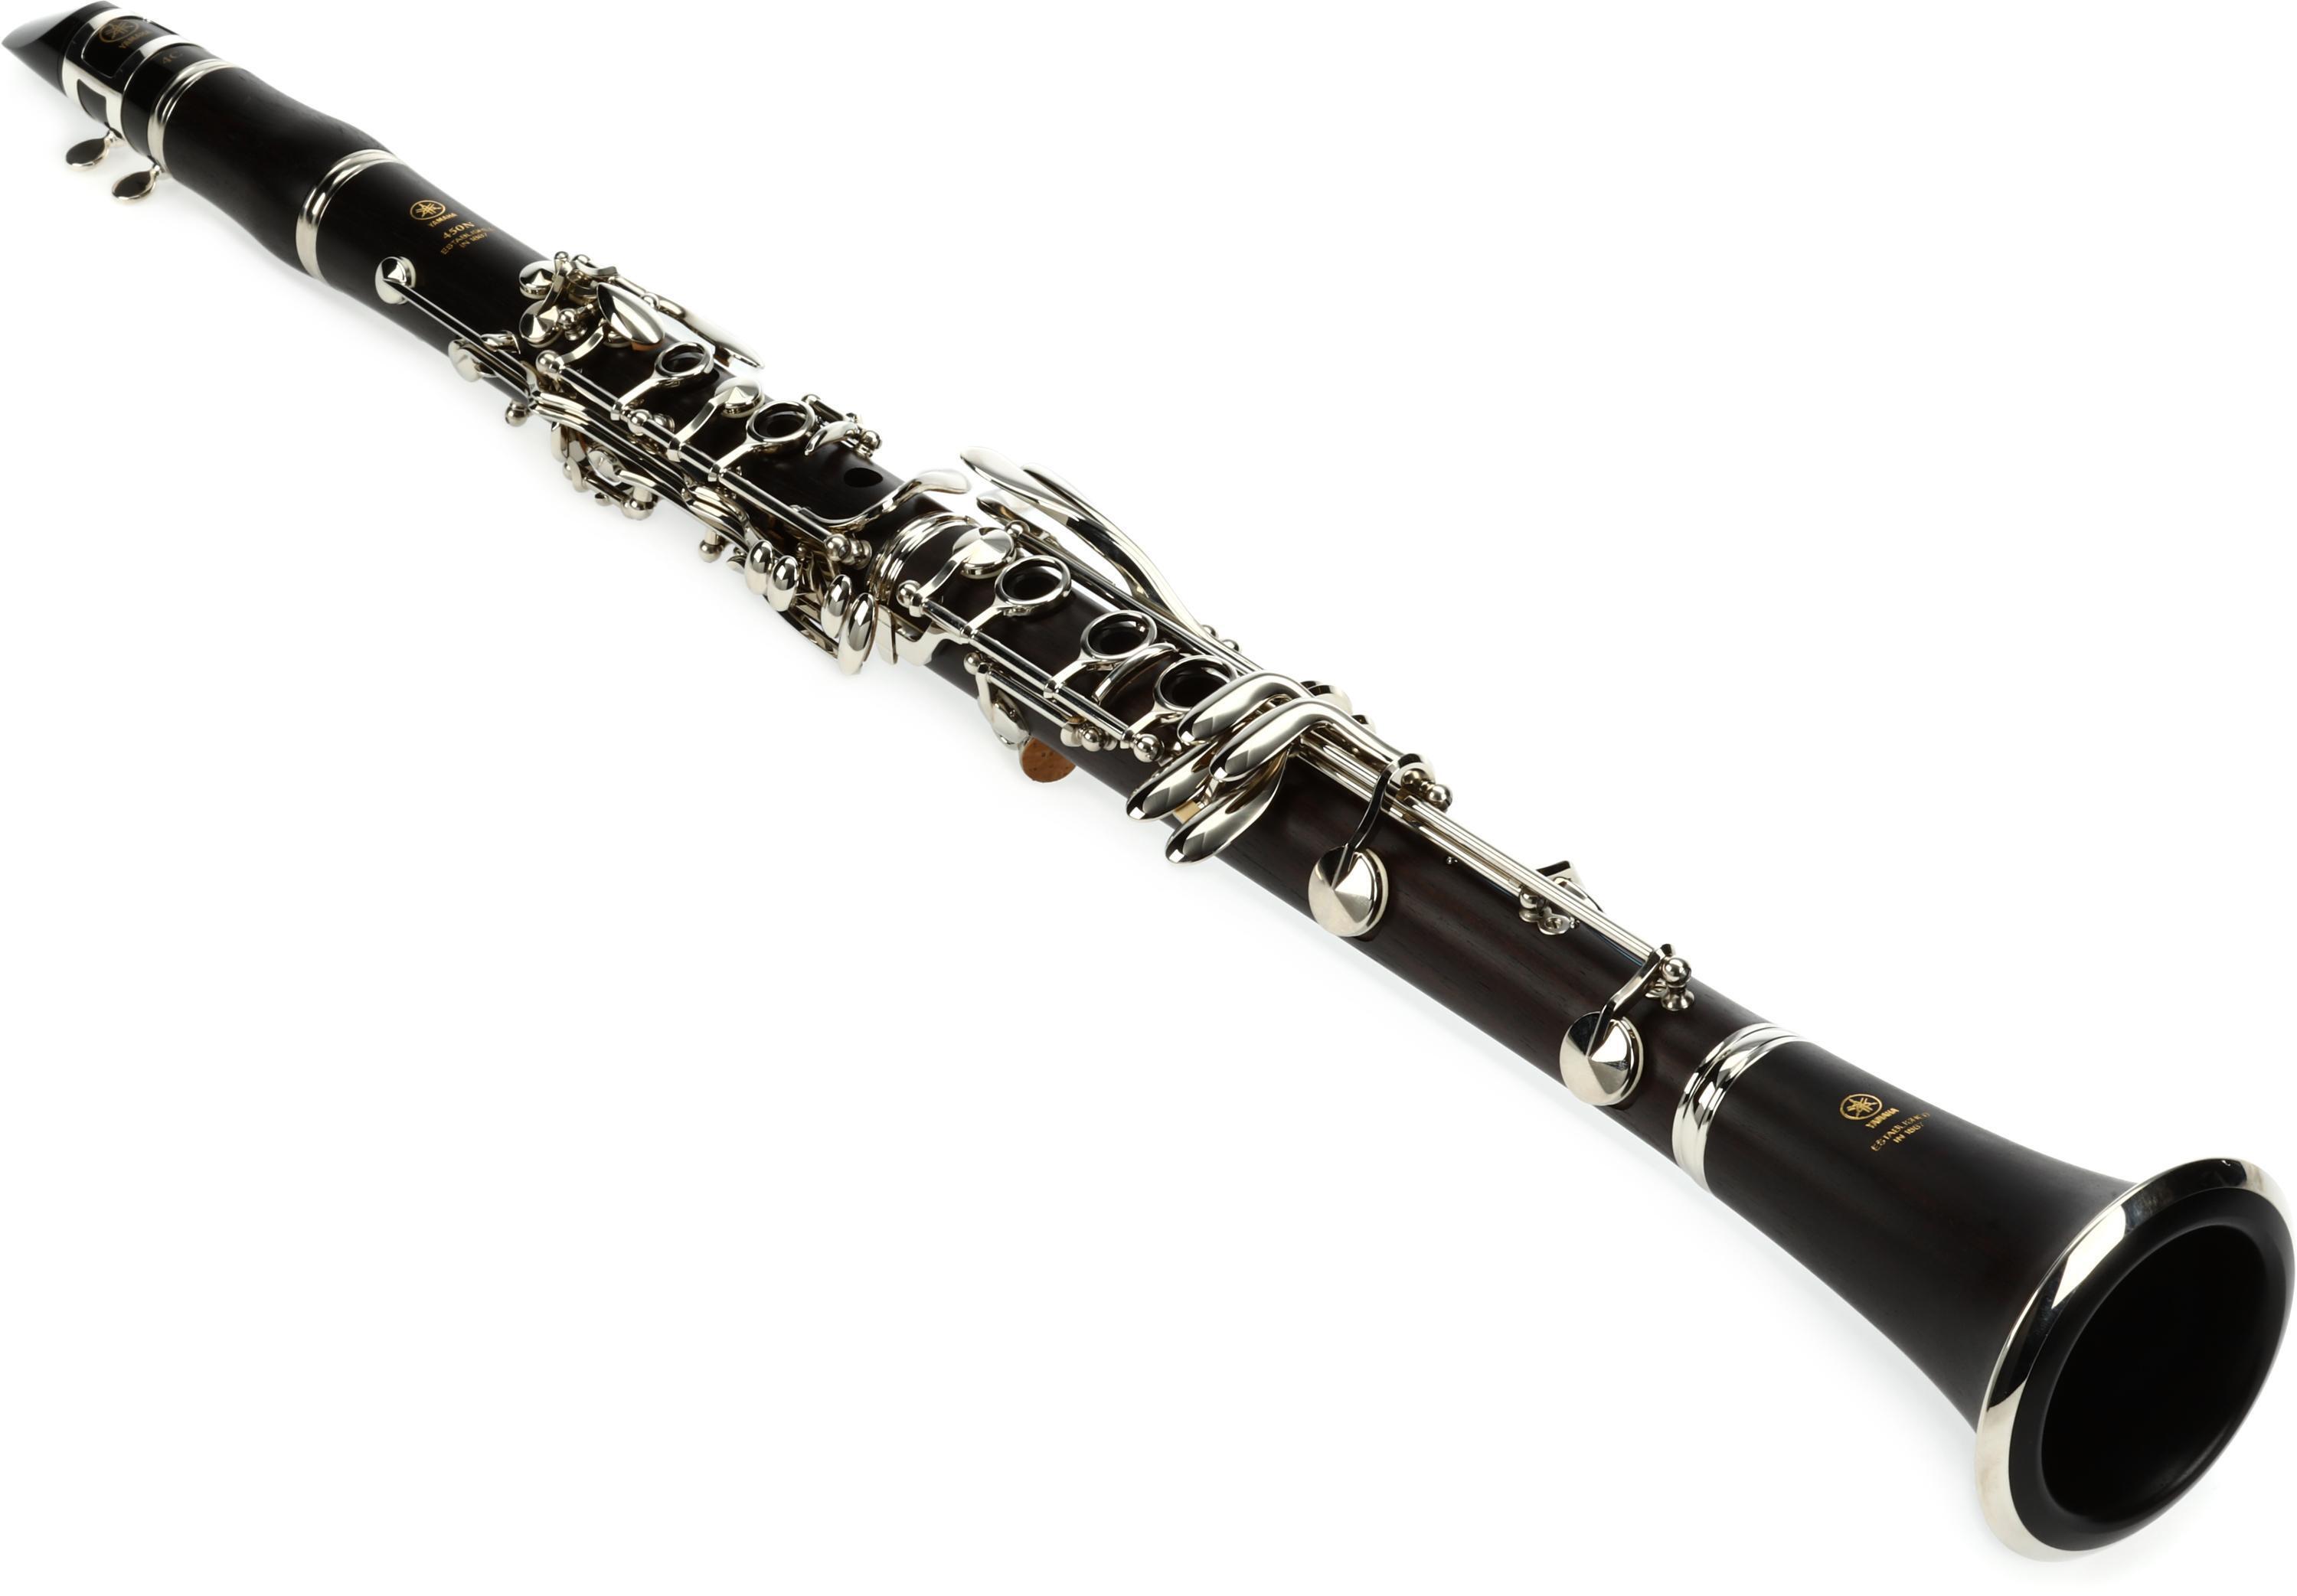 Yamaha YCL-450N Intermediate Clarinet with Nickel Keys